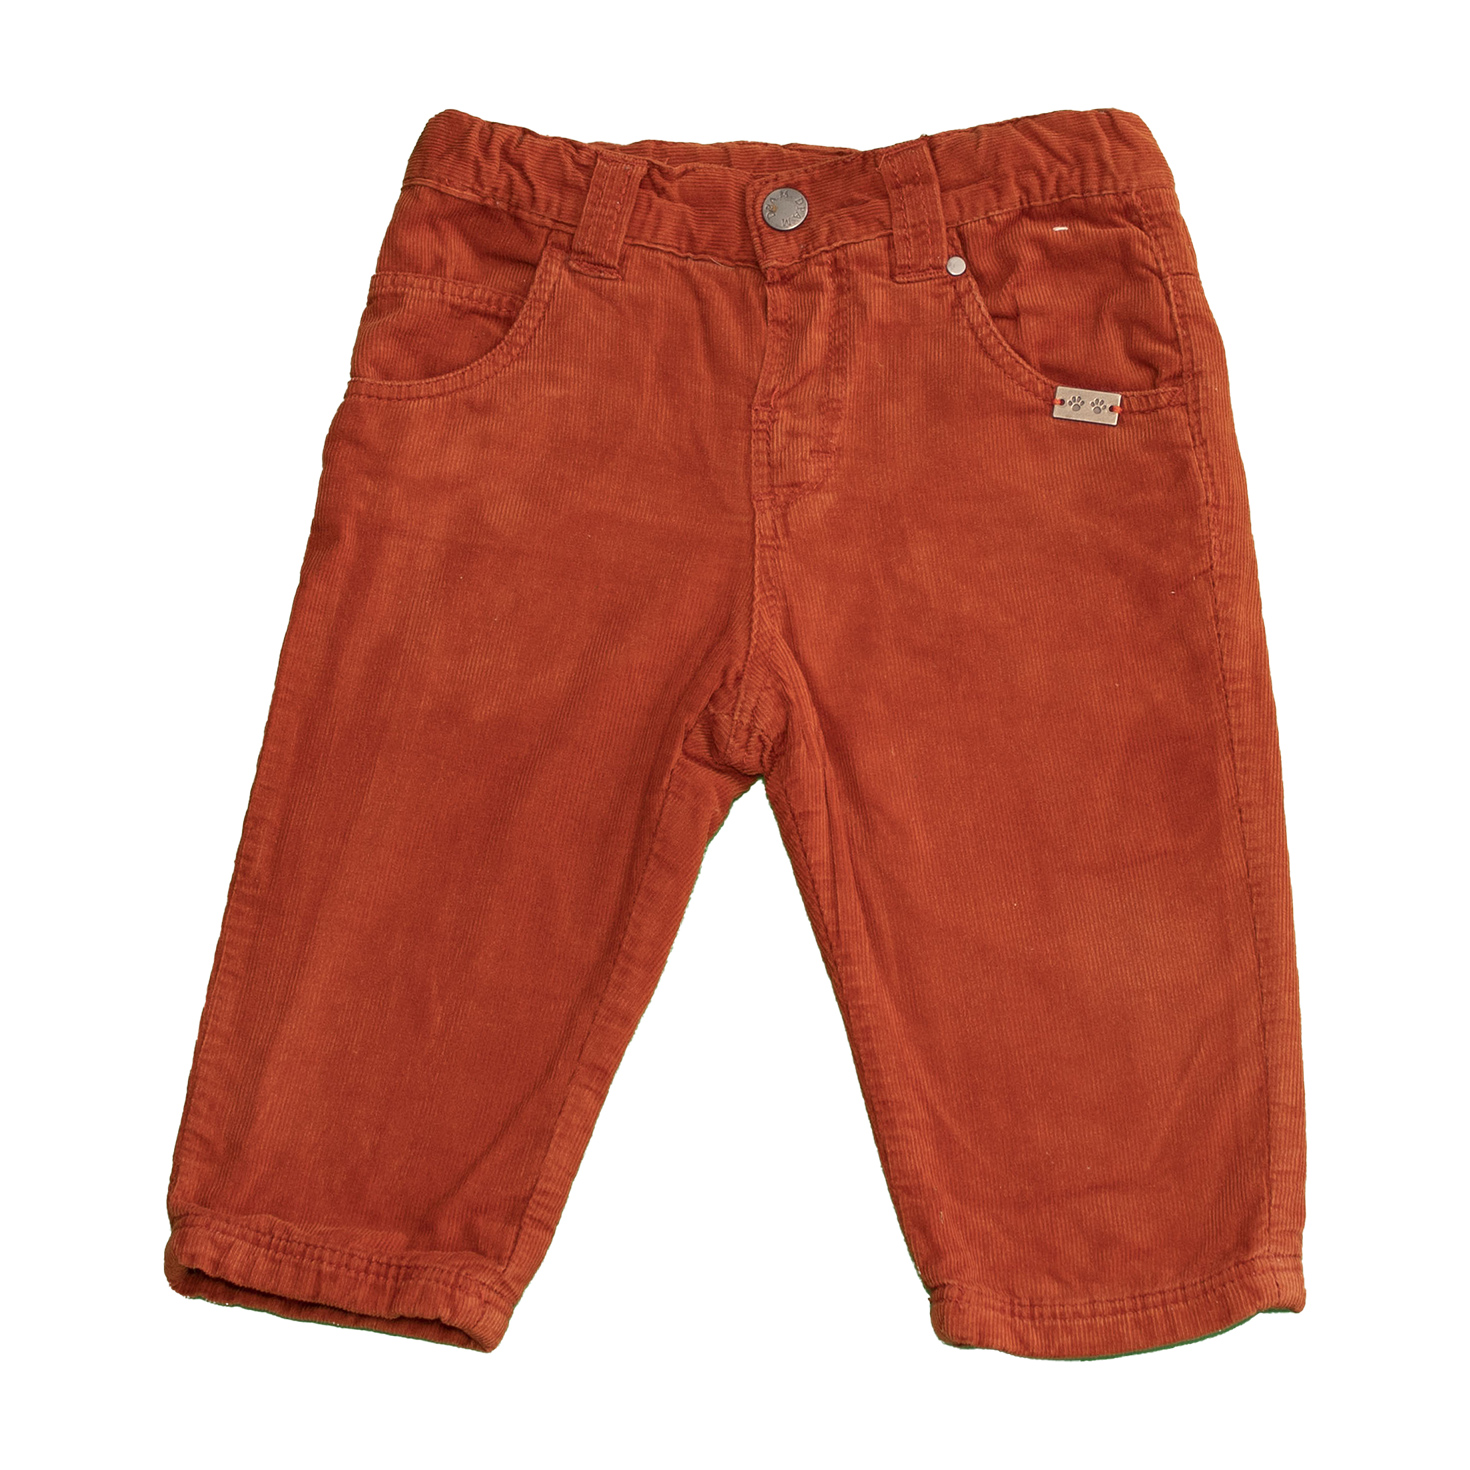 Pantalon rouille orange garçon DPAM - 9 mois